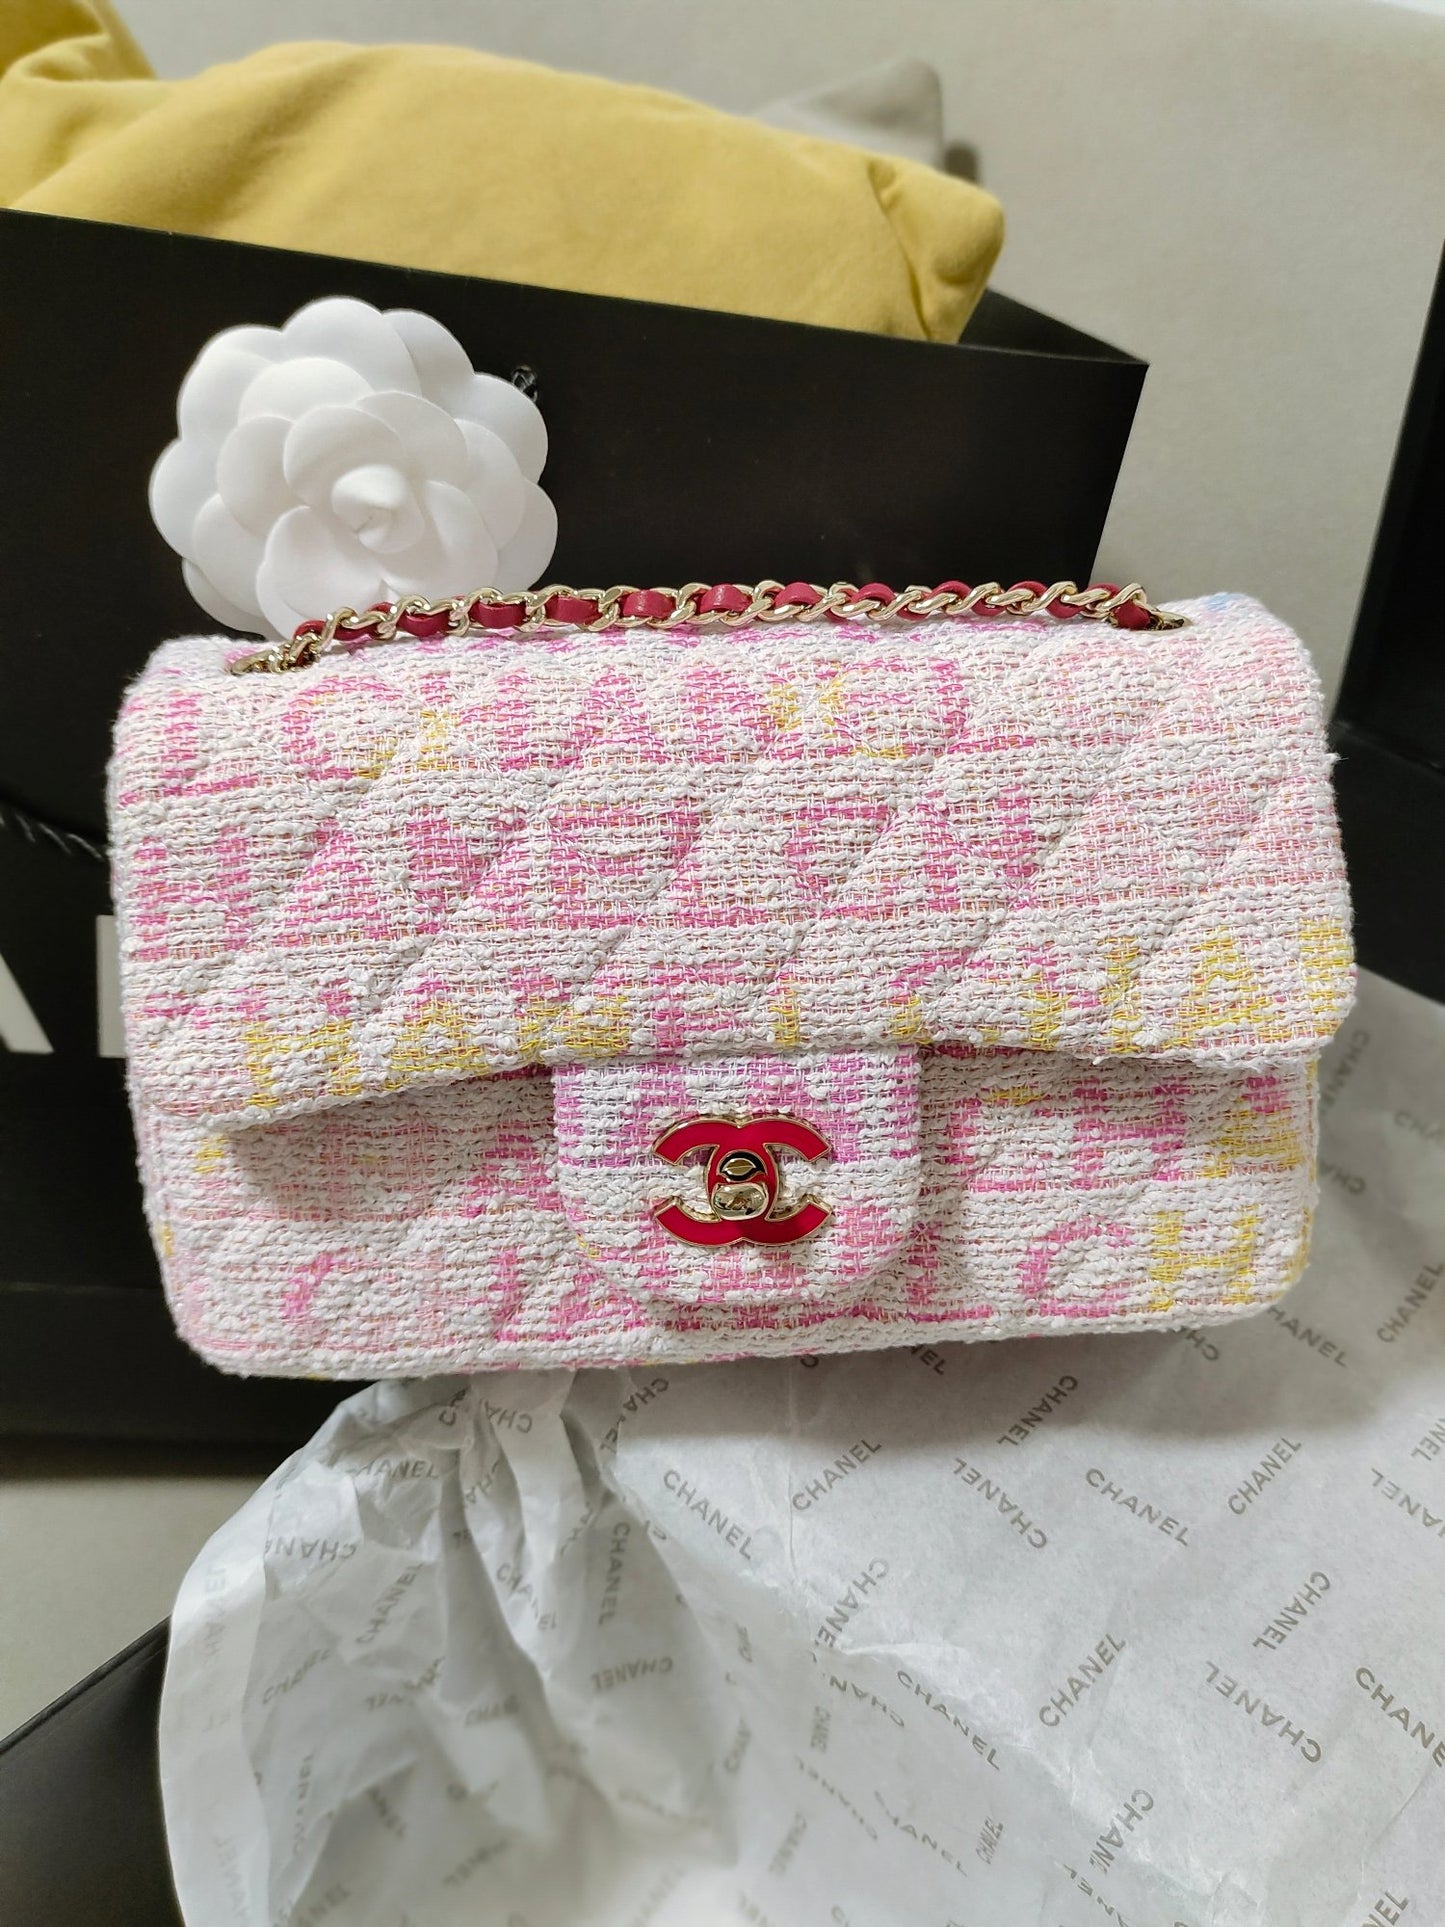 Chanel Tweed Classic flap bag